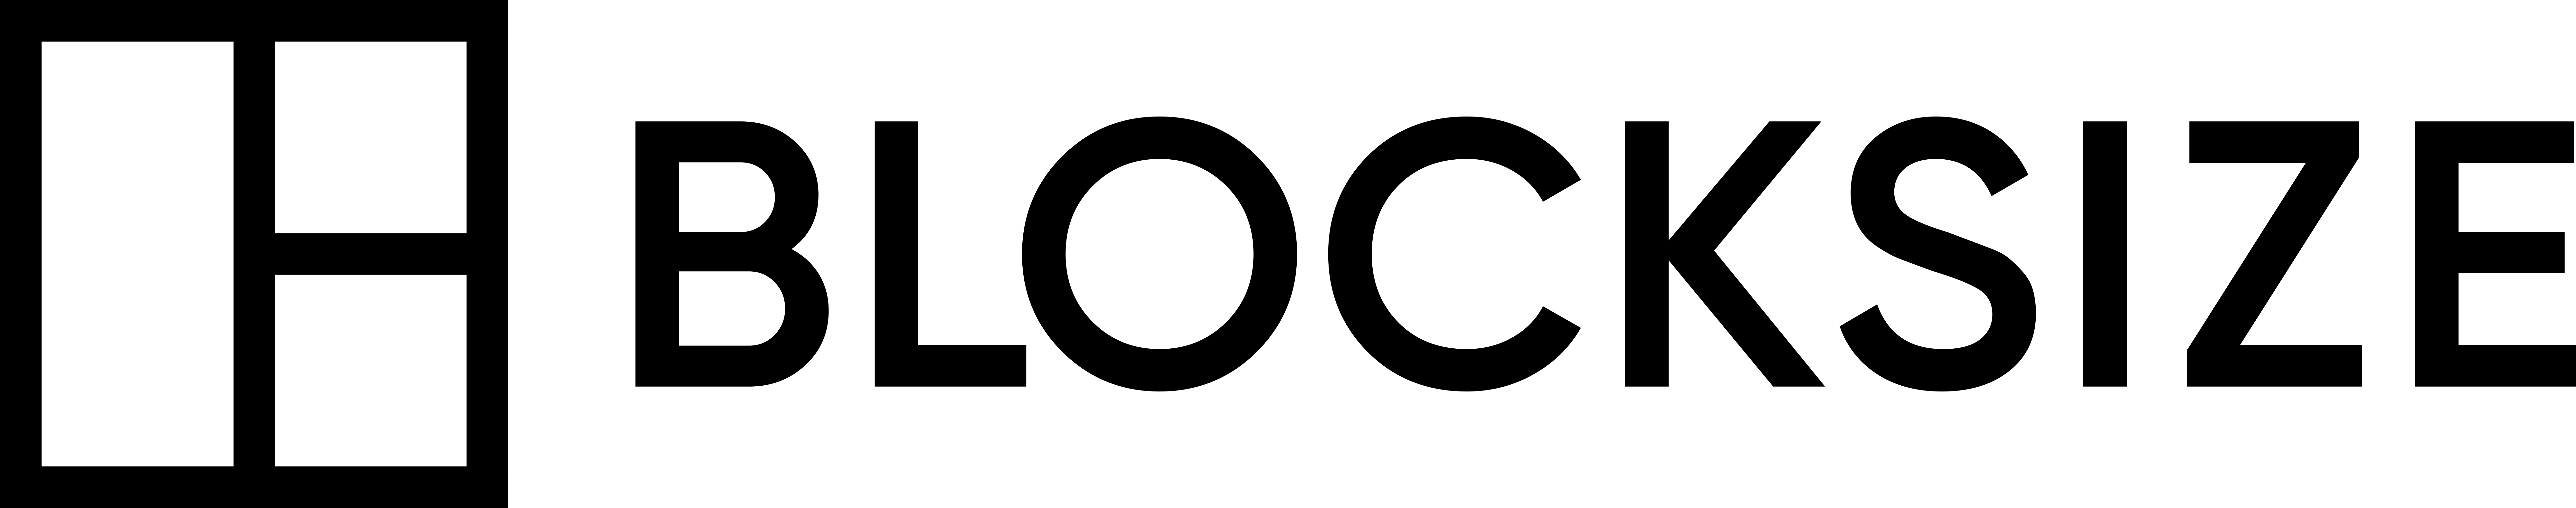 BLOCKSIZE - black logo